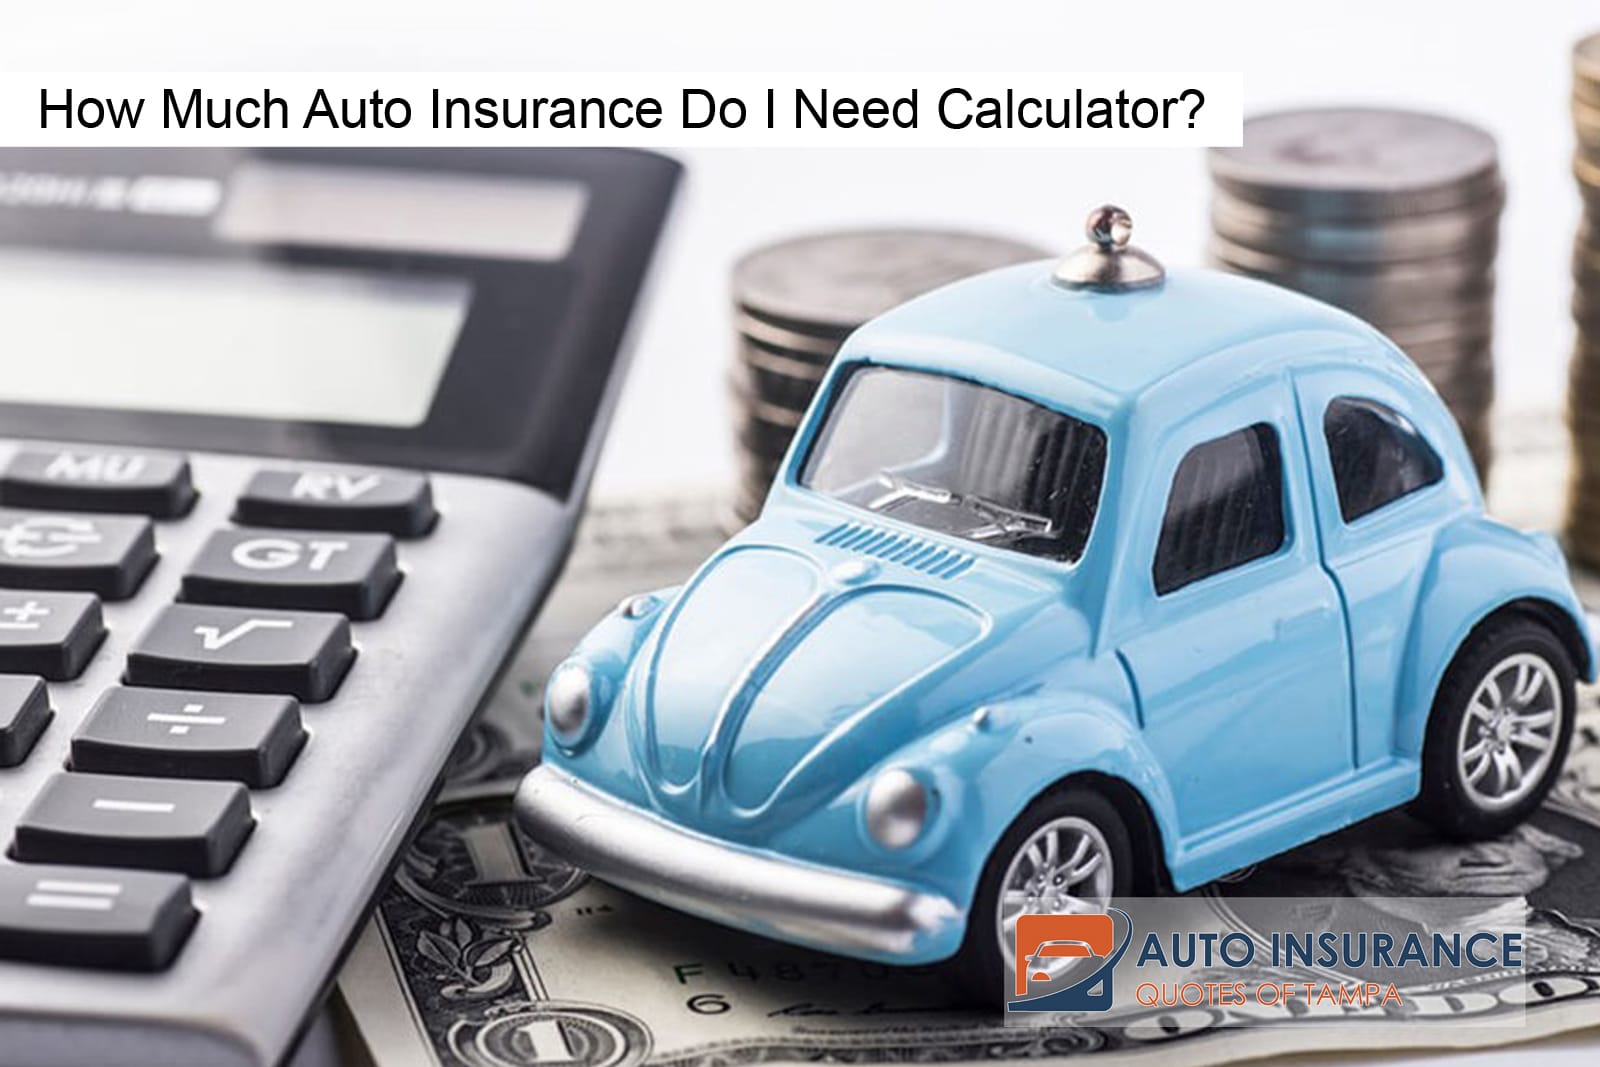 How Much Auto Insurance Do I Need Calculator?